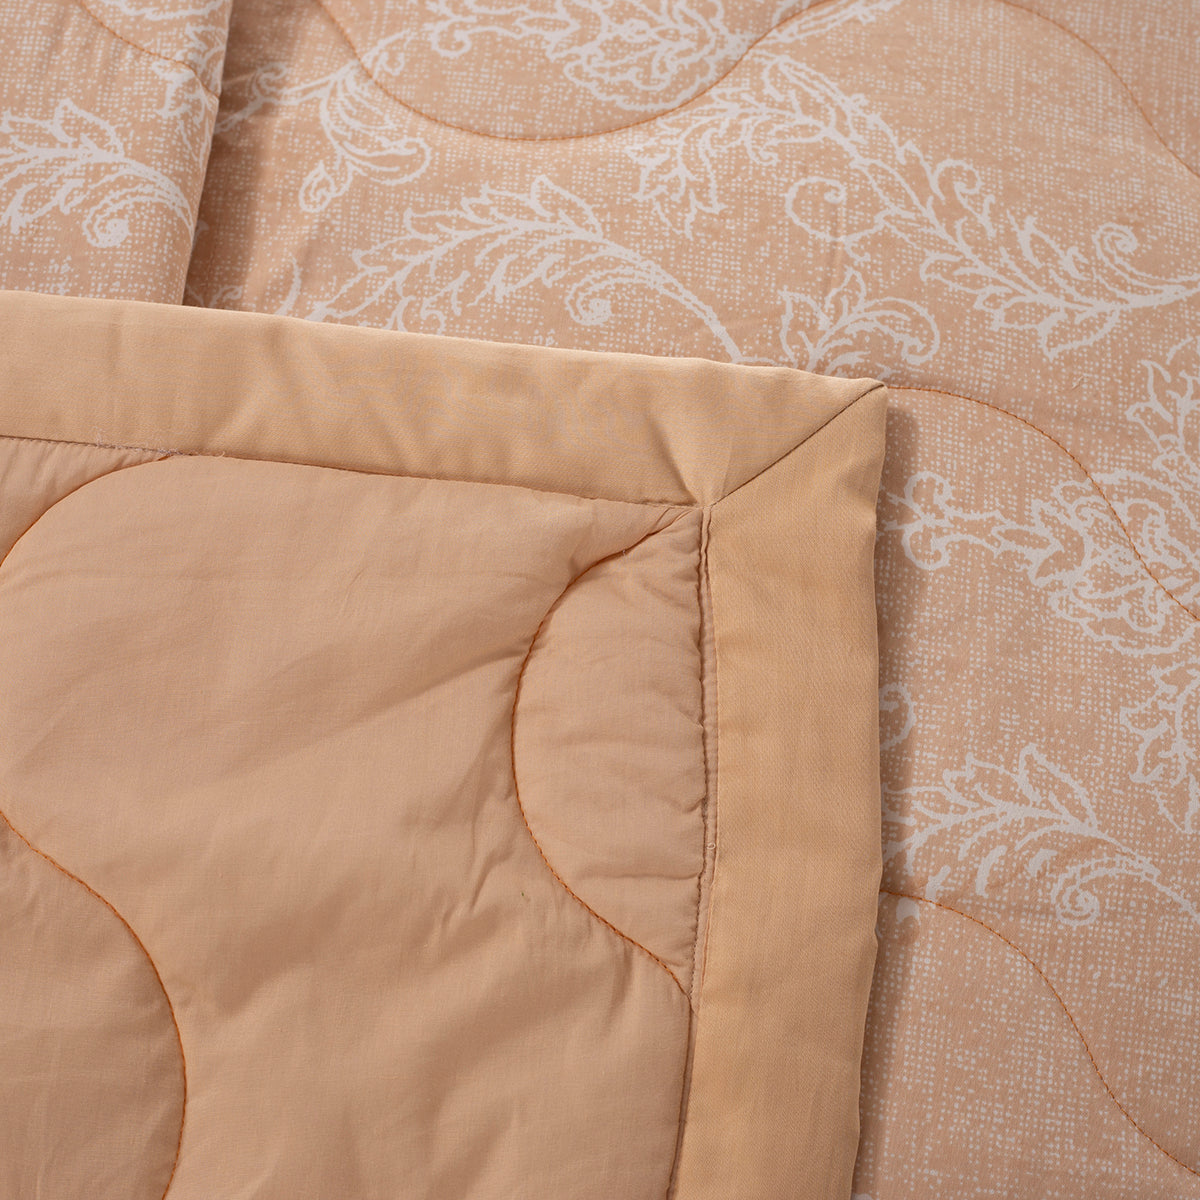 Nostalgic Attire Classic Cambric Peach 8PC Quilt/Quilted Bed Cover Set